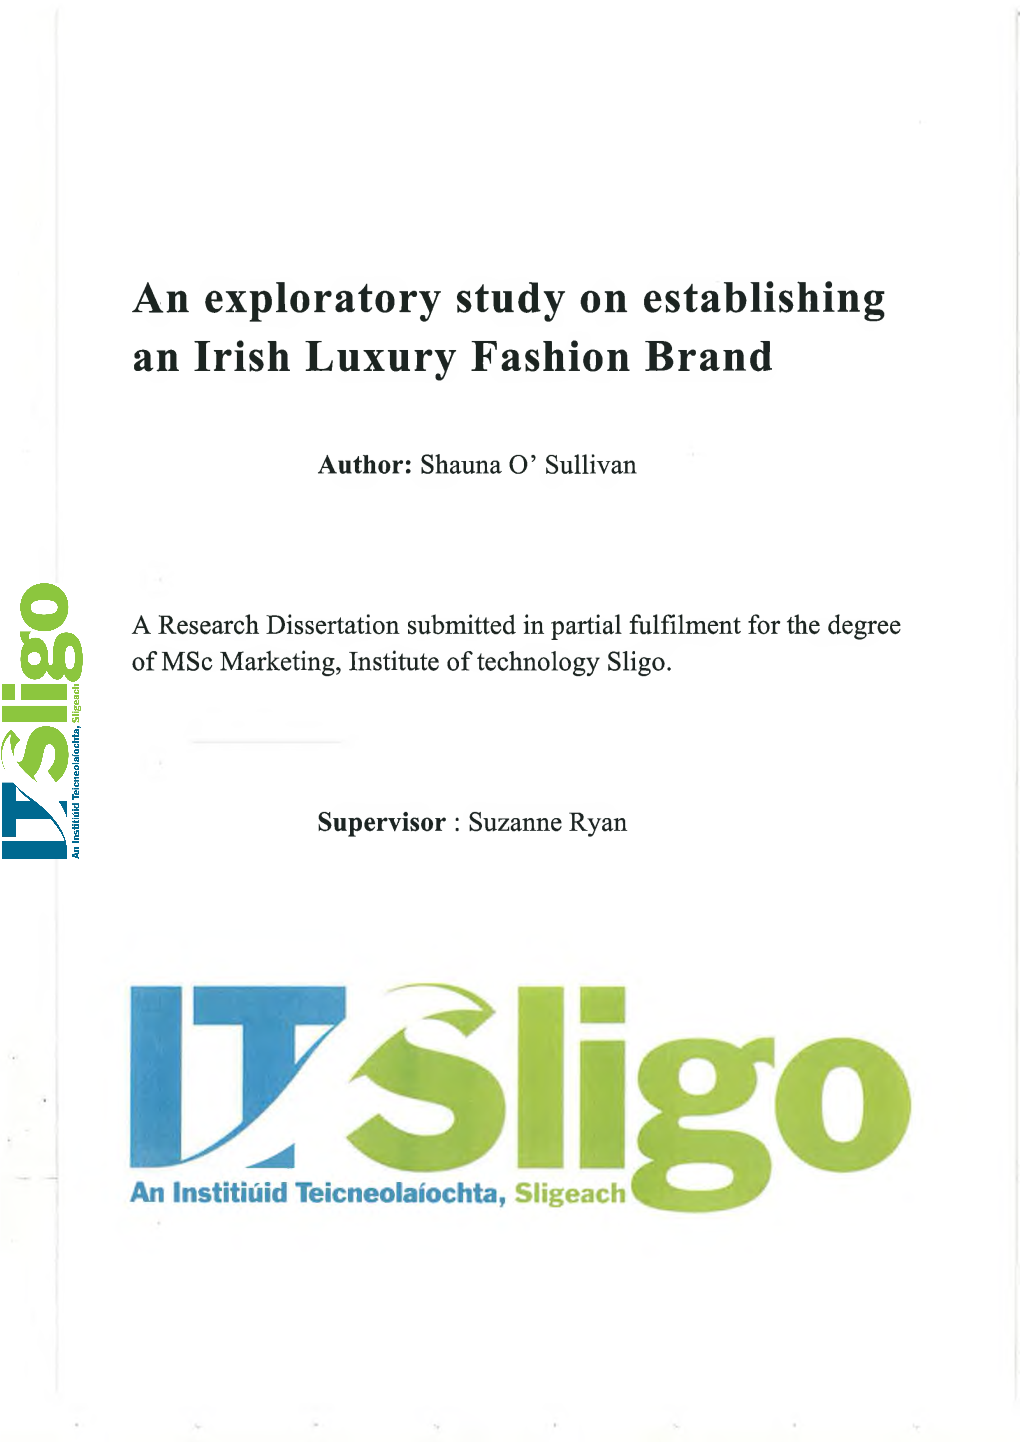 An Exploratory Study on Establishing an Irish Luxury Fashion Brand